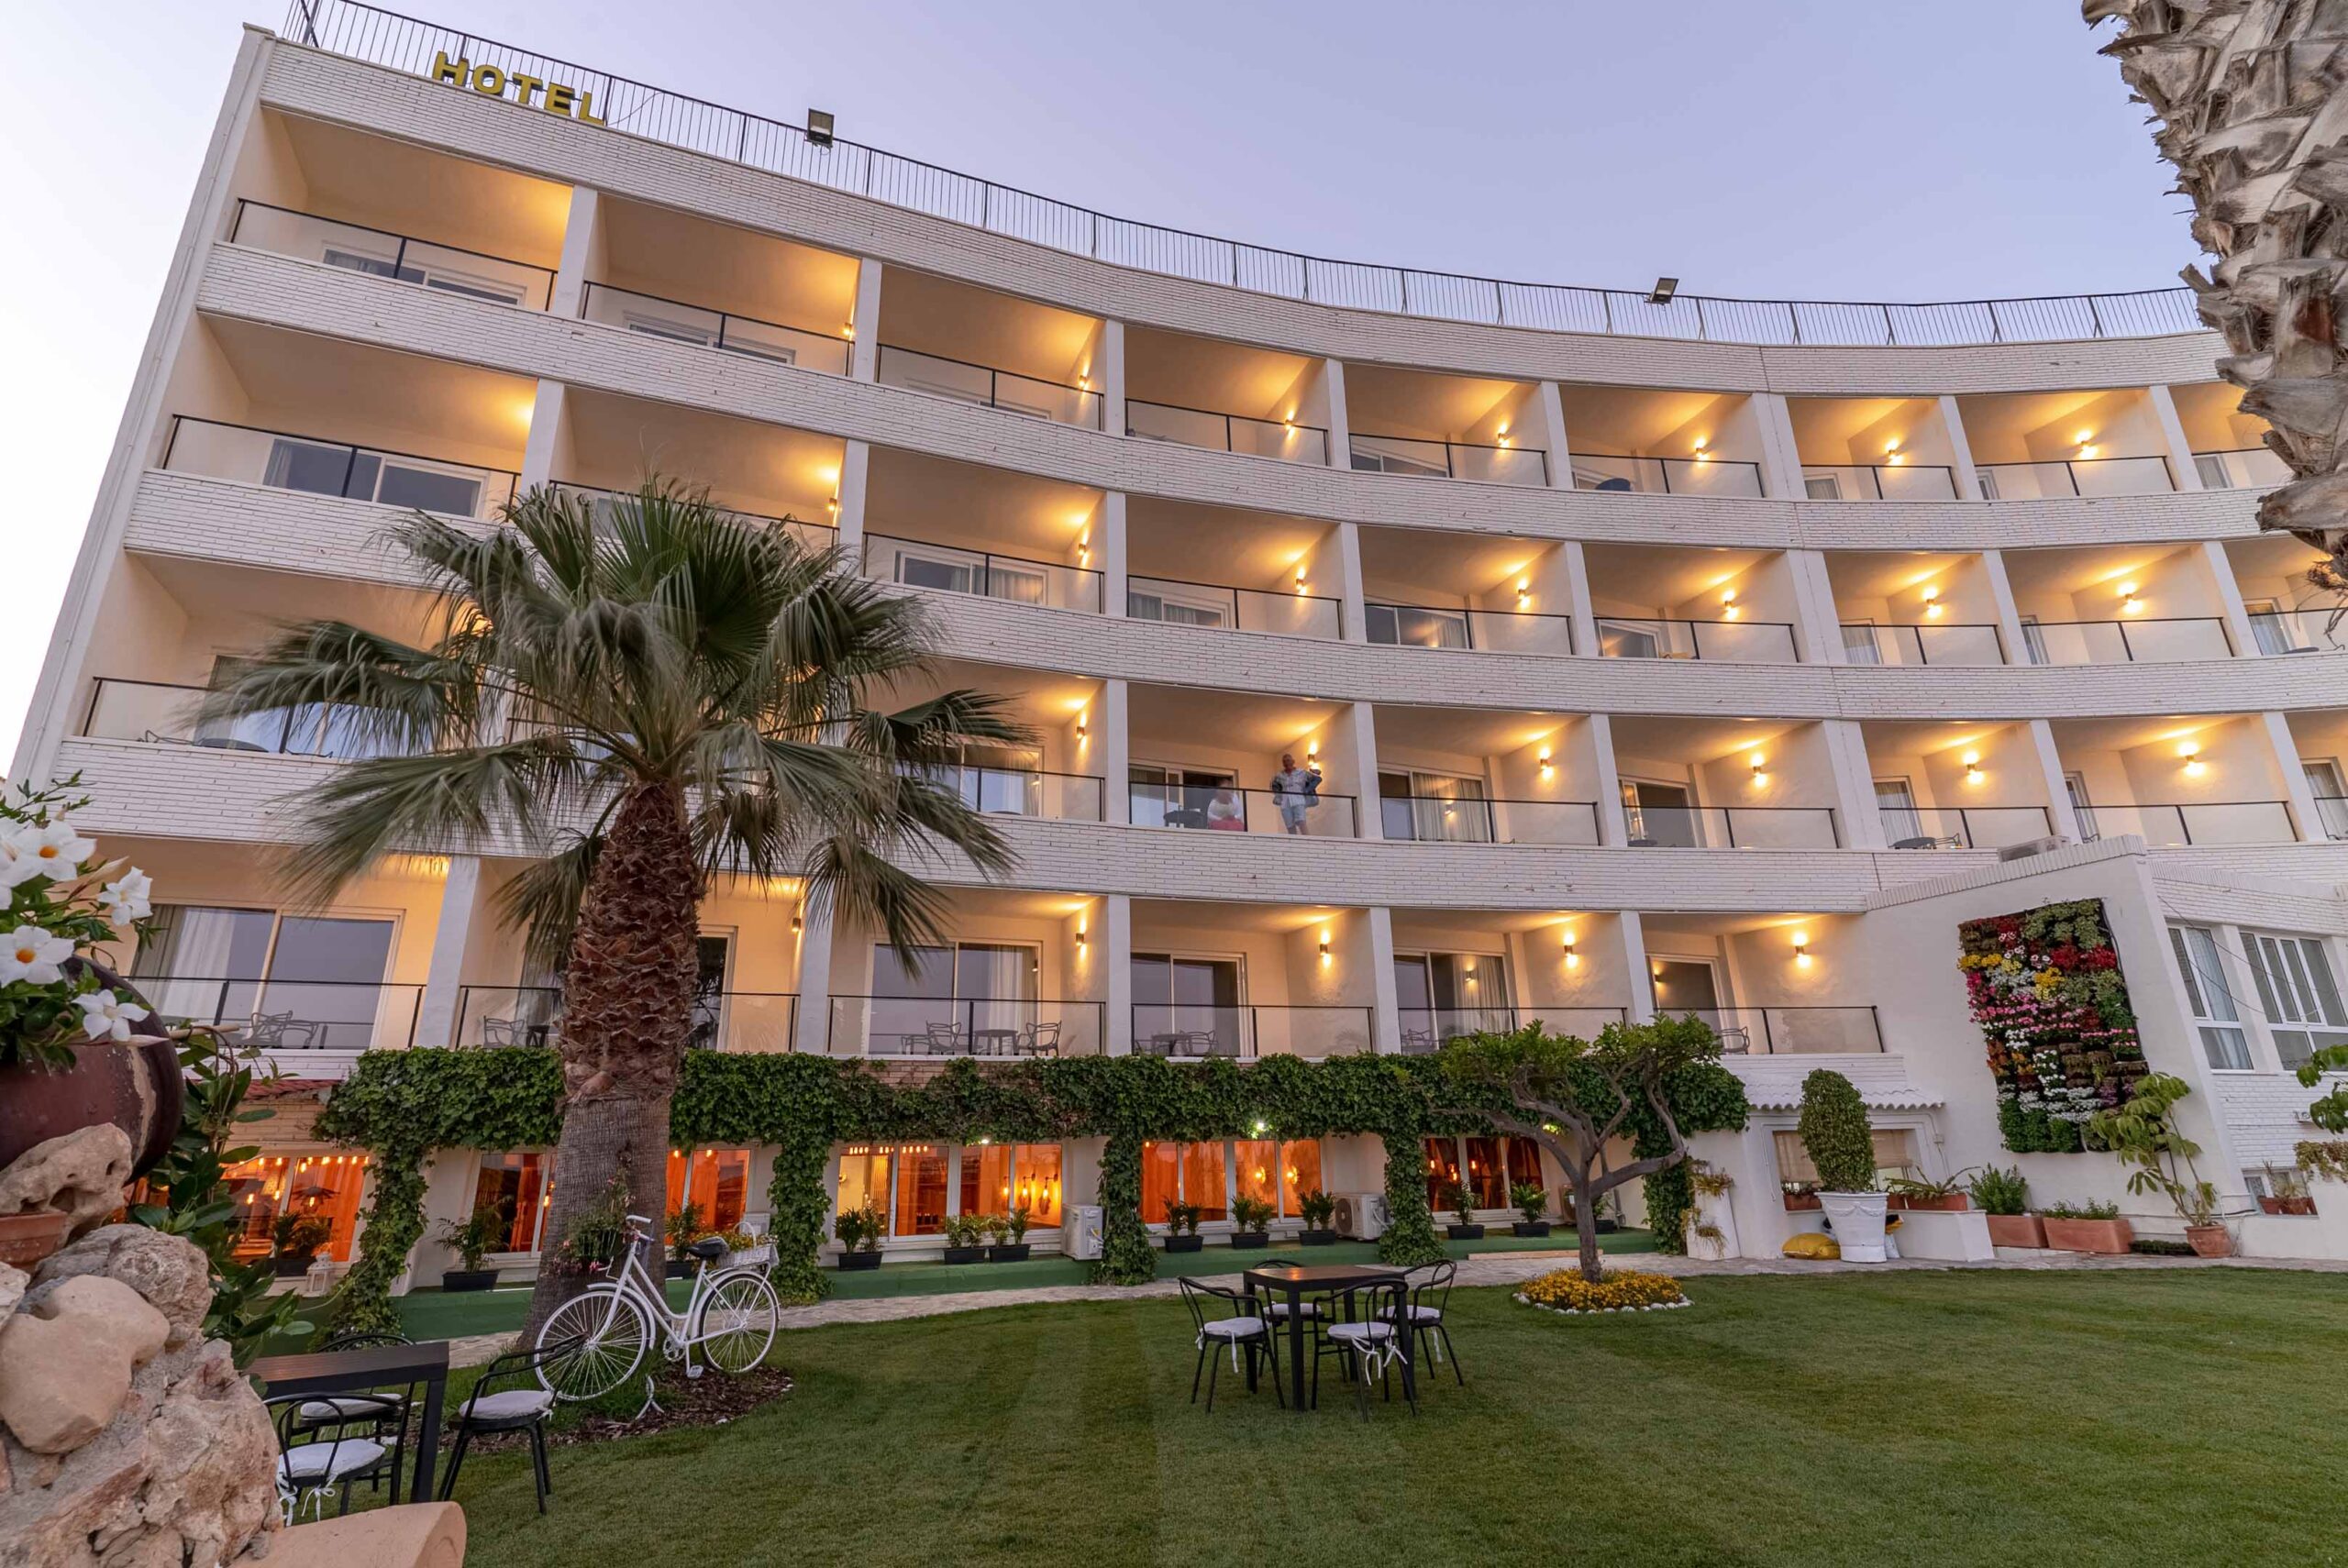 ramada-resort-wyndham-puerto-de-mazarron-murcia-hotel7384723985